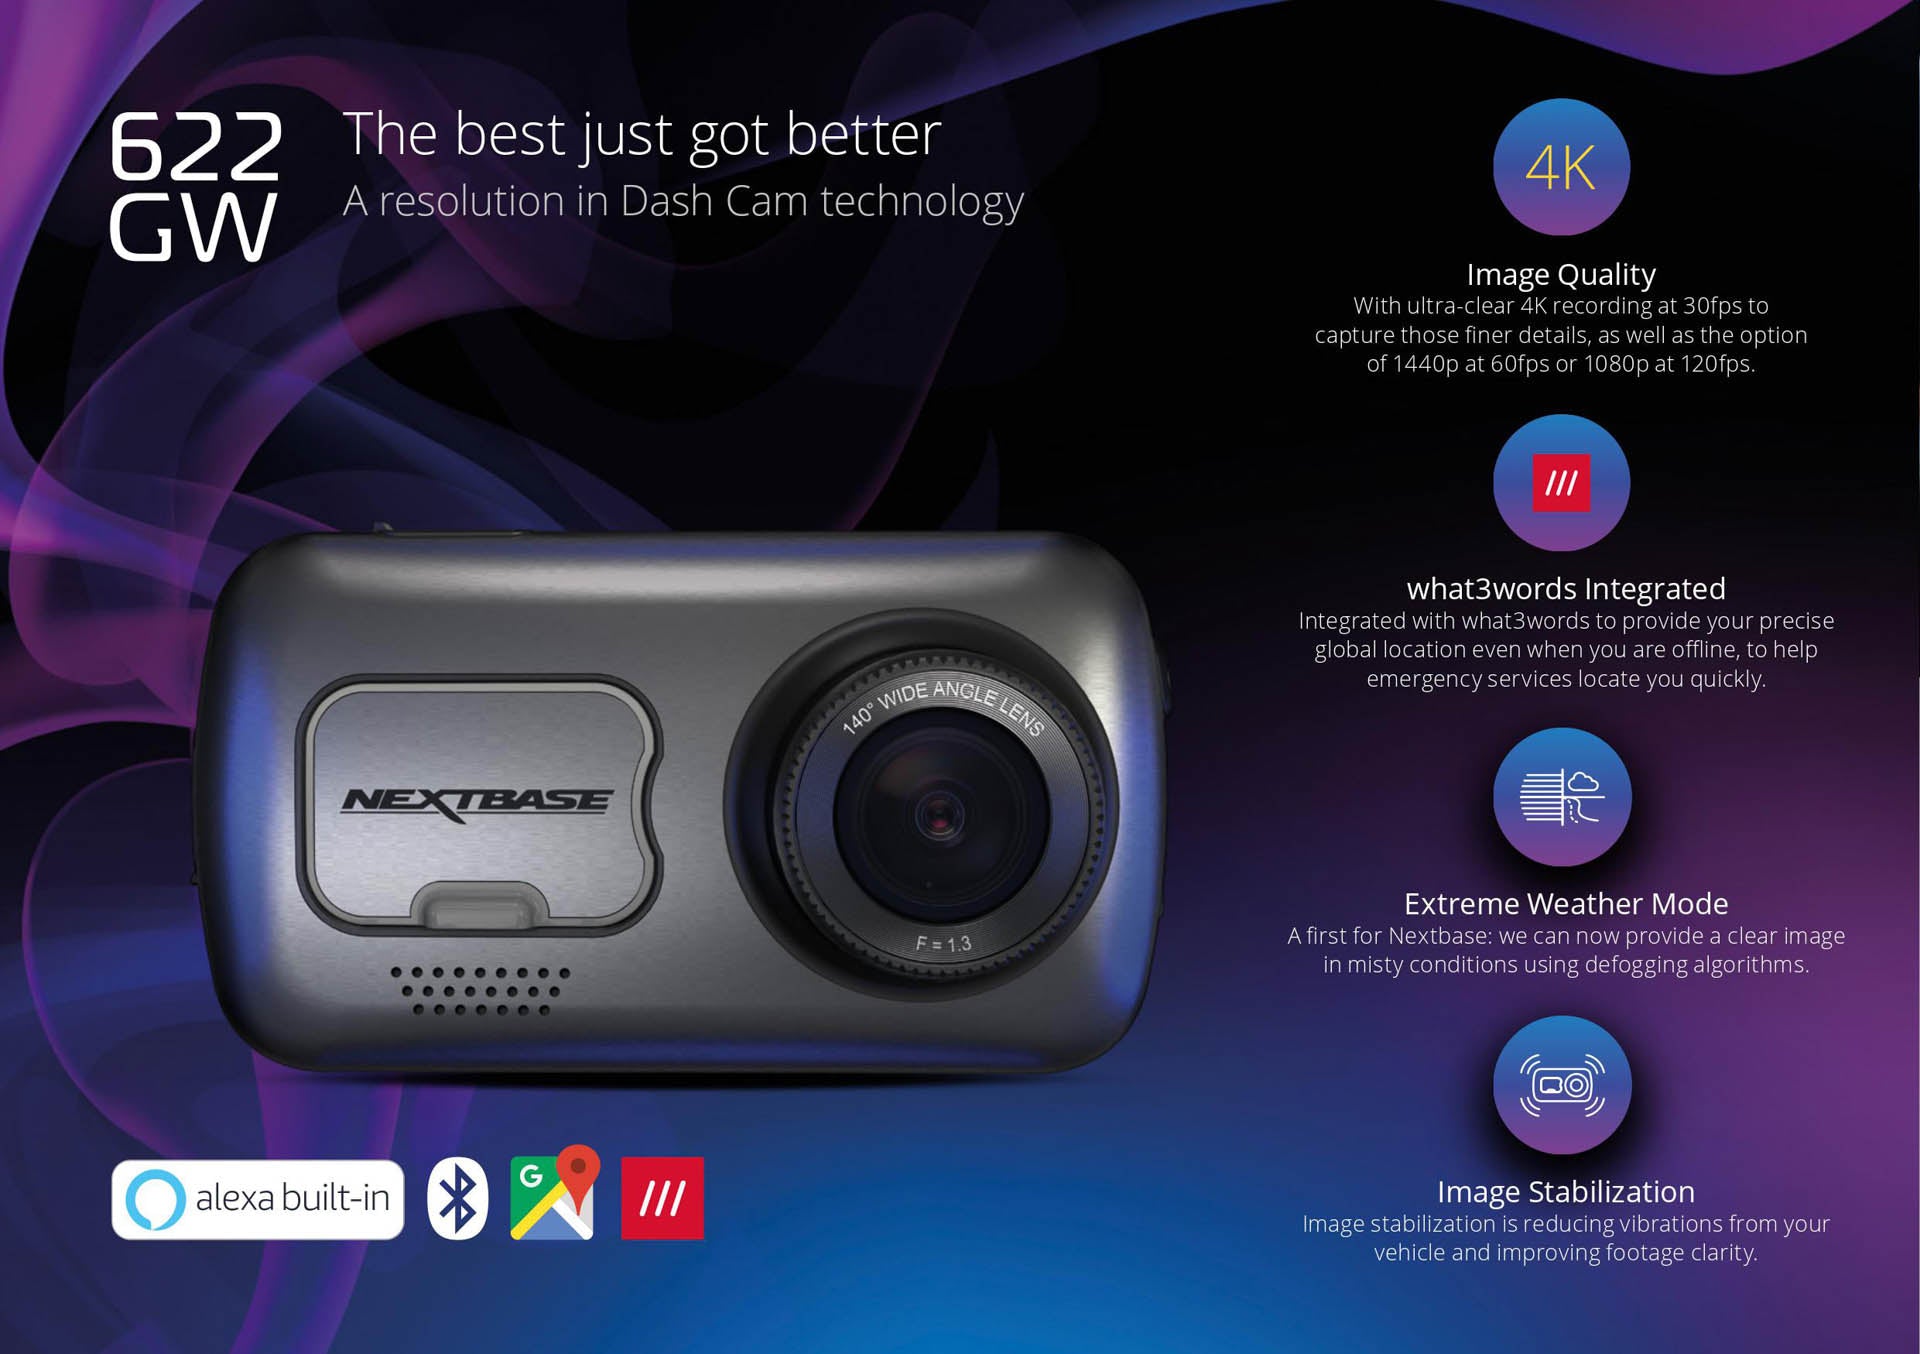 NENEXTXTBASE 622GW Dash Cam 4K HD resolution 30FPS 3in HD IPS touch screen